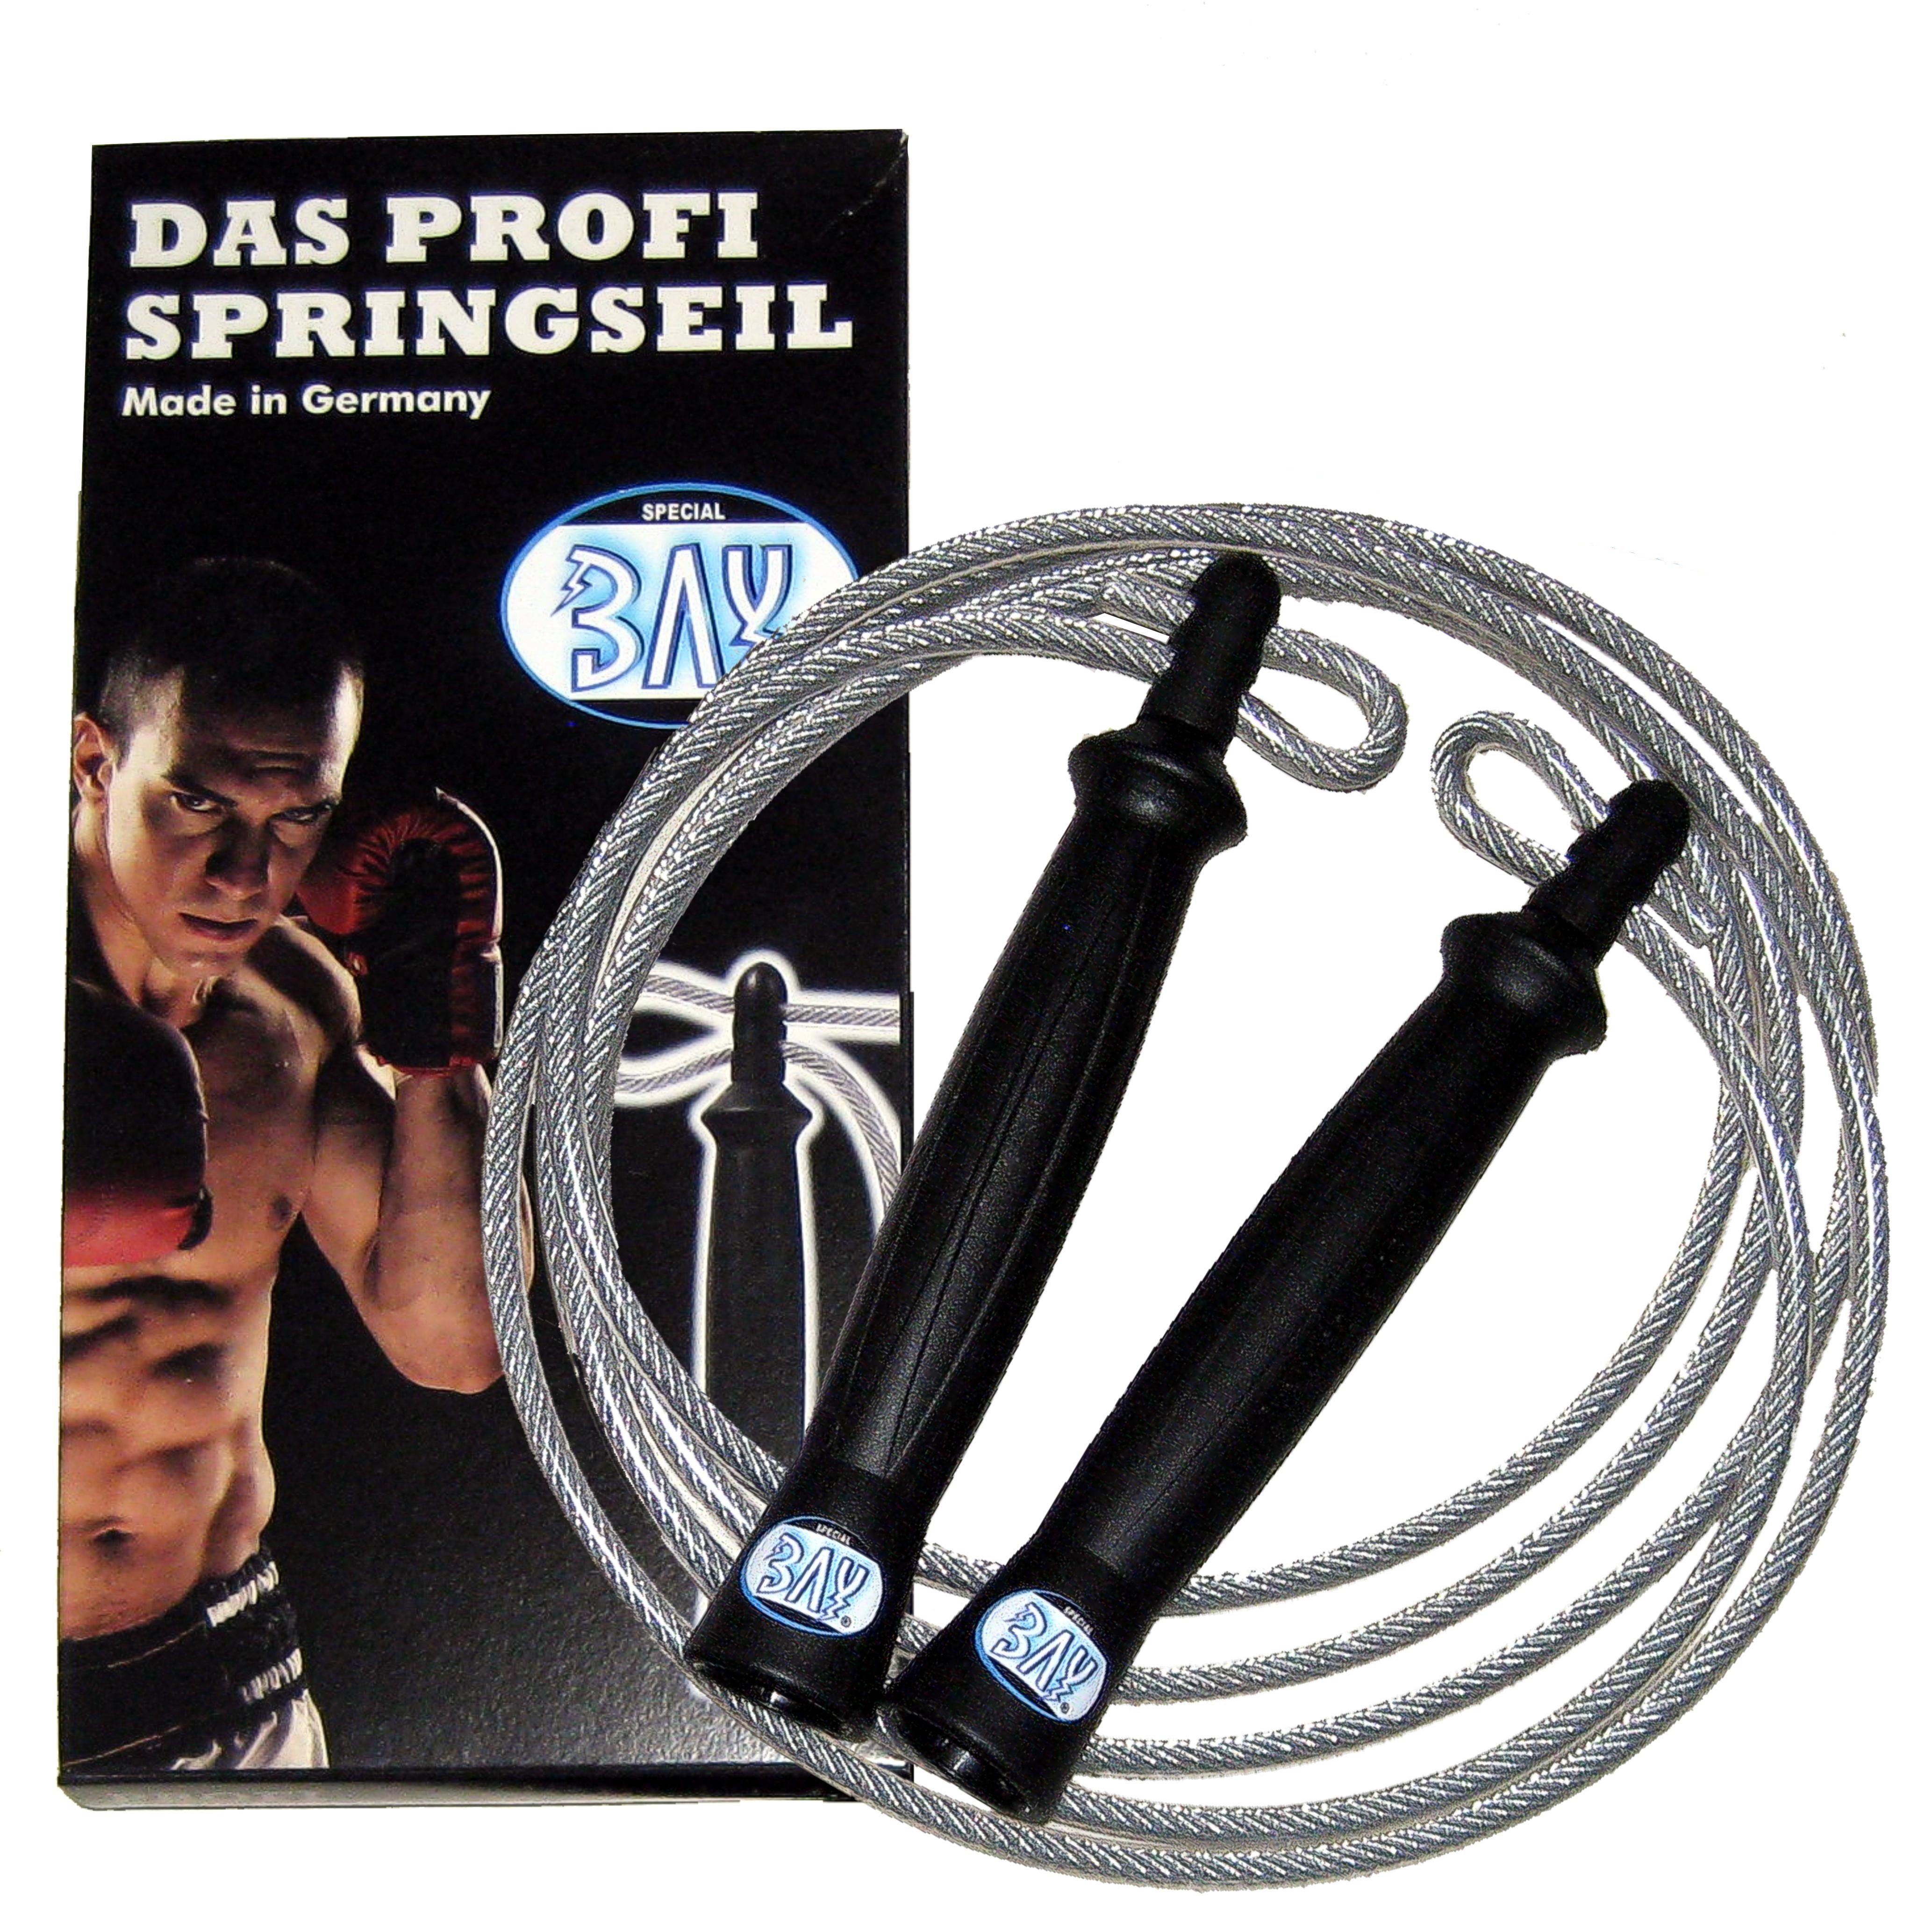 BAY-Sports Springseil Made in Germany DELUX 280 Stahl Seele Sprungseil High Speed PVC Mantel, Längenverstellbar - MADE IN GERMANY Prägung